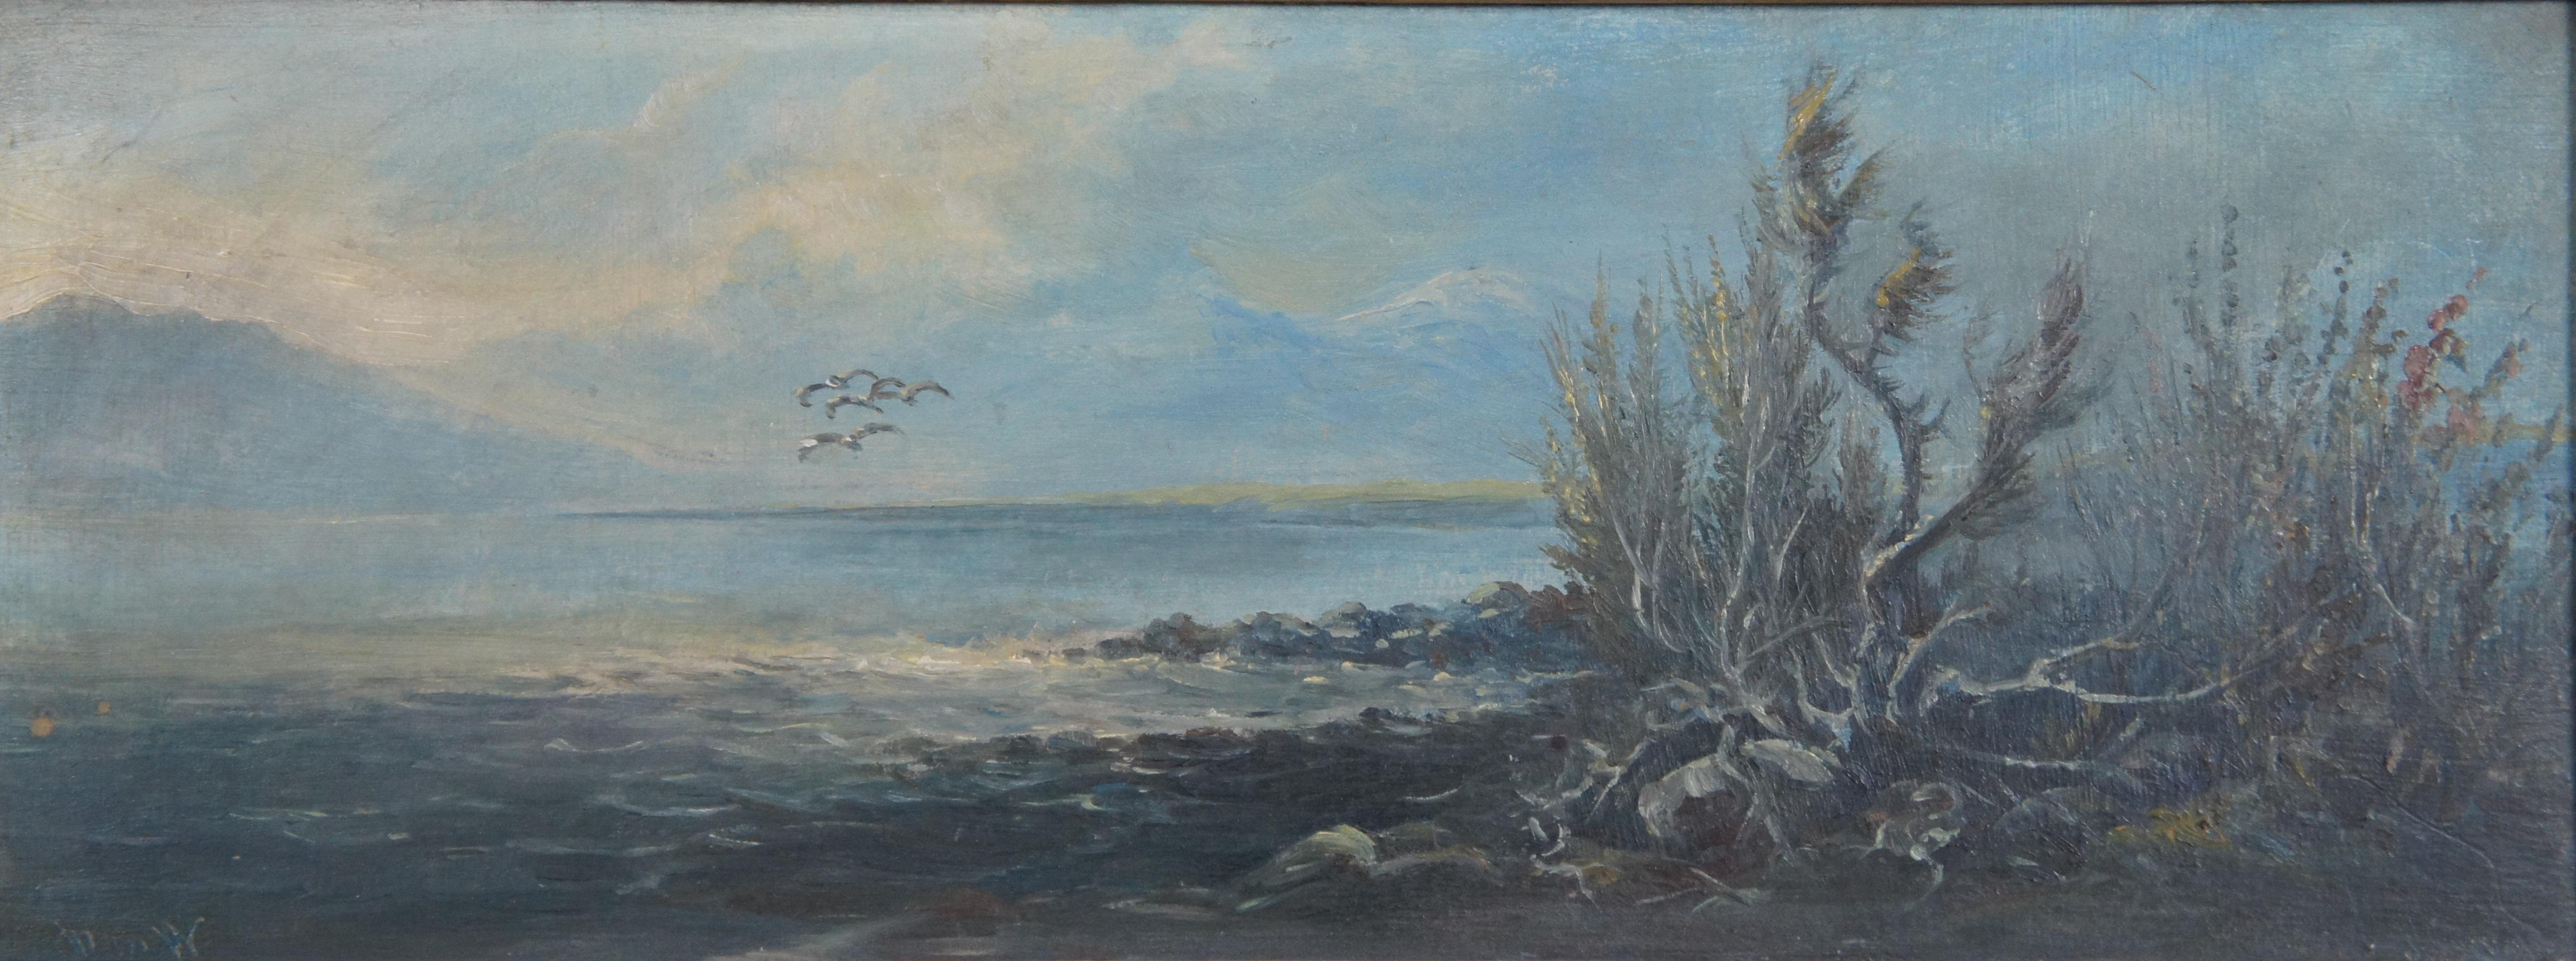 Antique Coastal Landscape Seascape Oil Painting on Board w Gold Frame 19